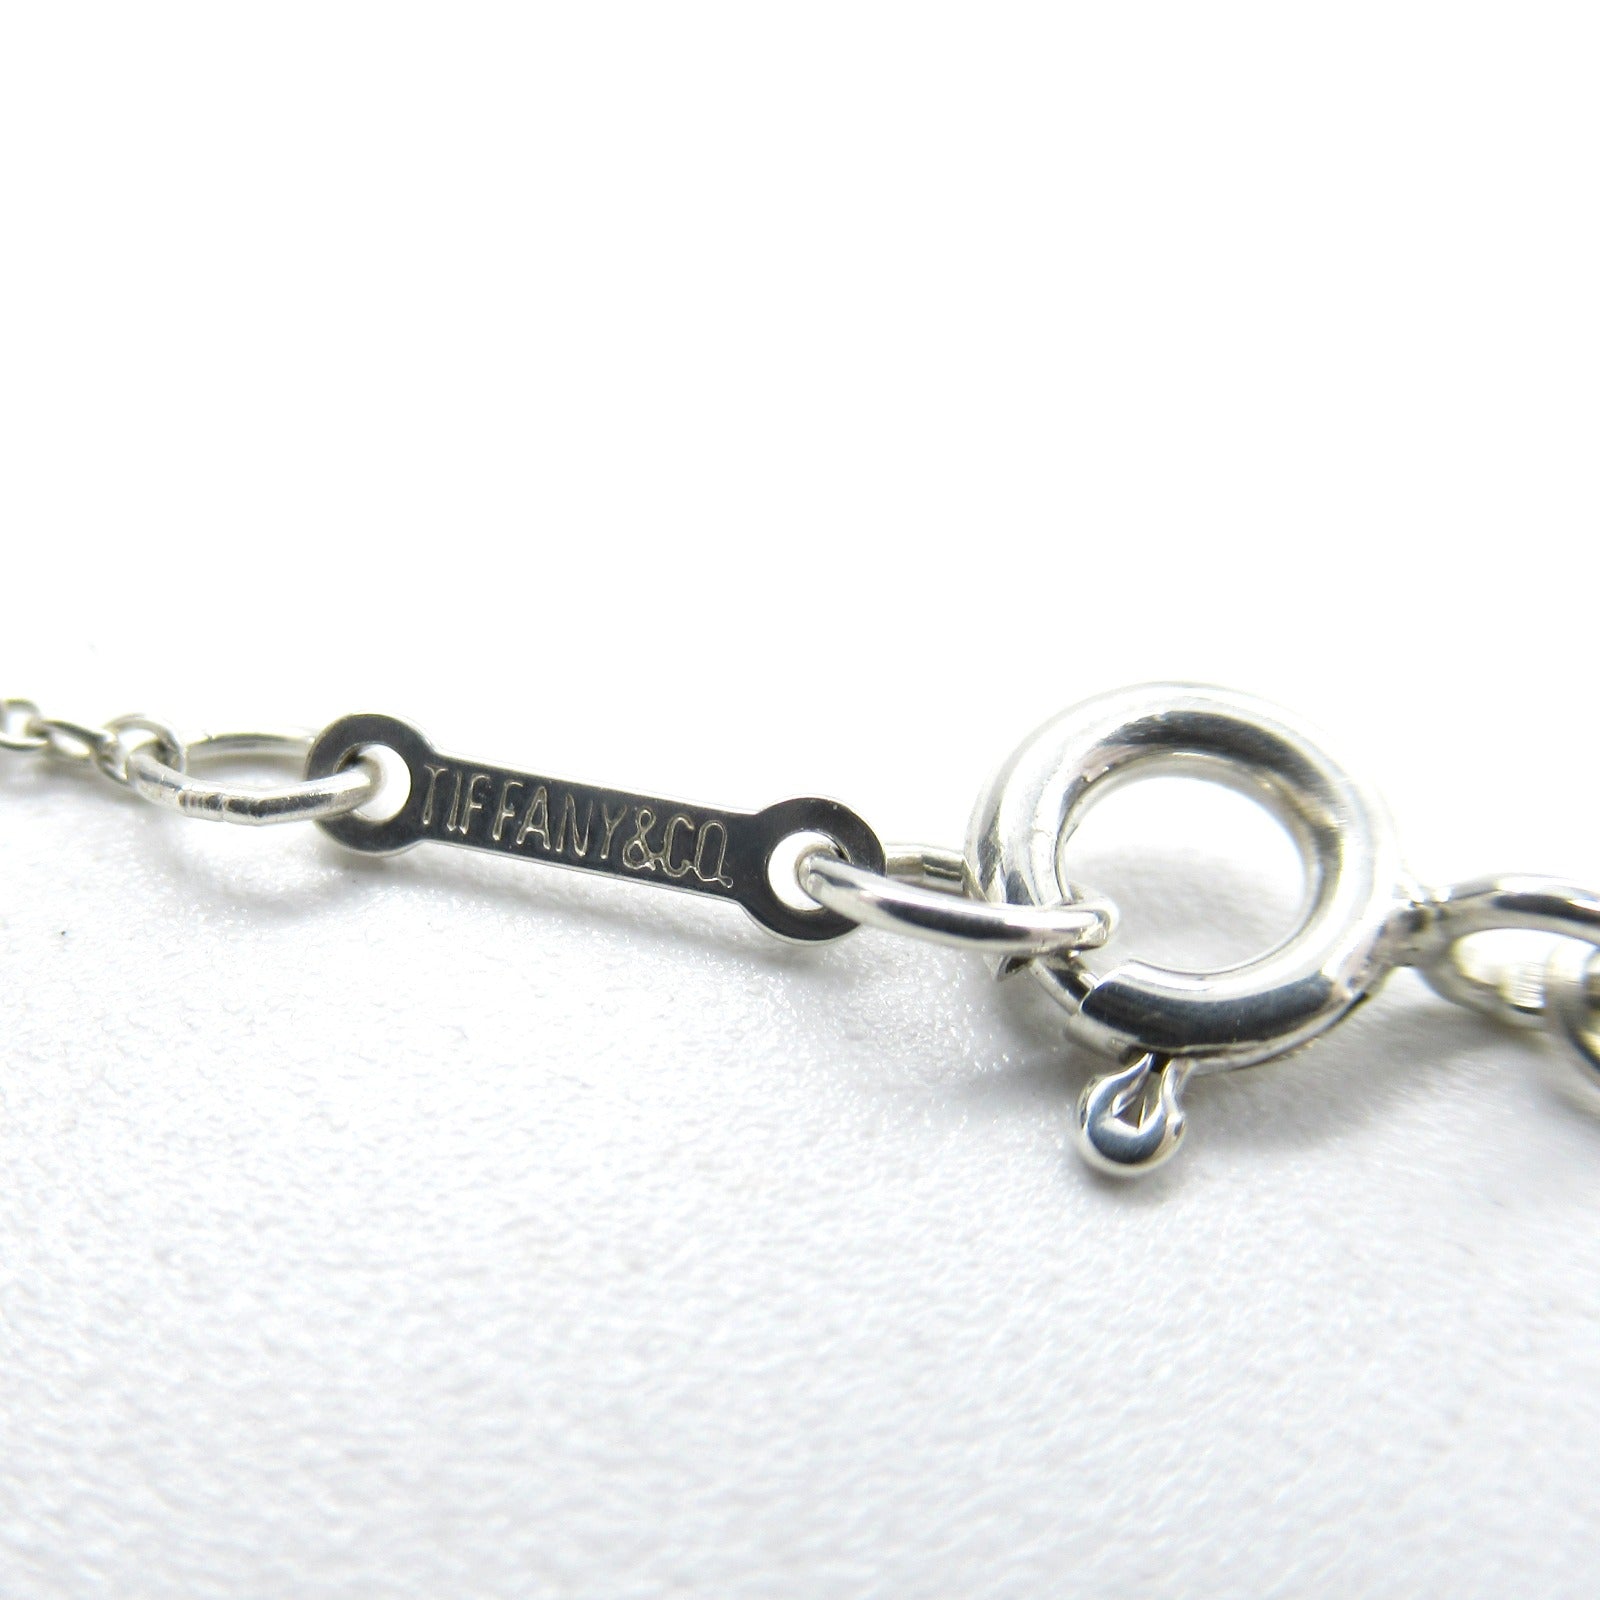 TIFFANY&amp;CO Aliex  Necklace Collary Jewelry Silver 925  Silver Collar